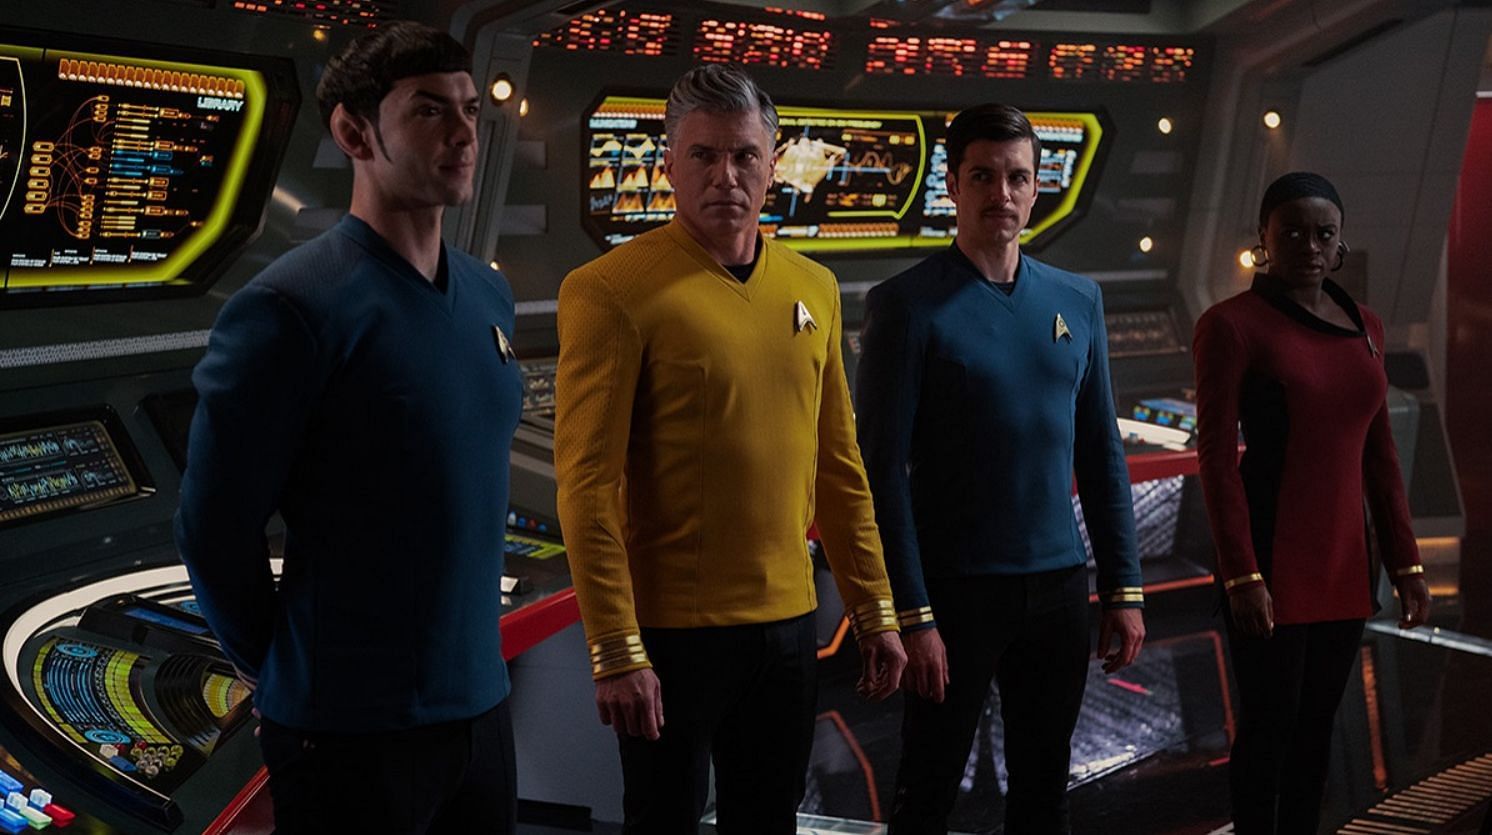 Star Trek: Strange New Worlds (TV Series 2022– ) - IMDb